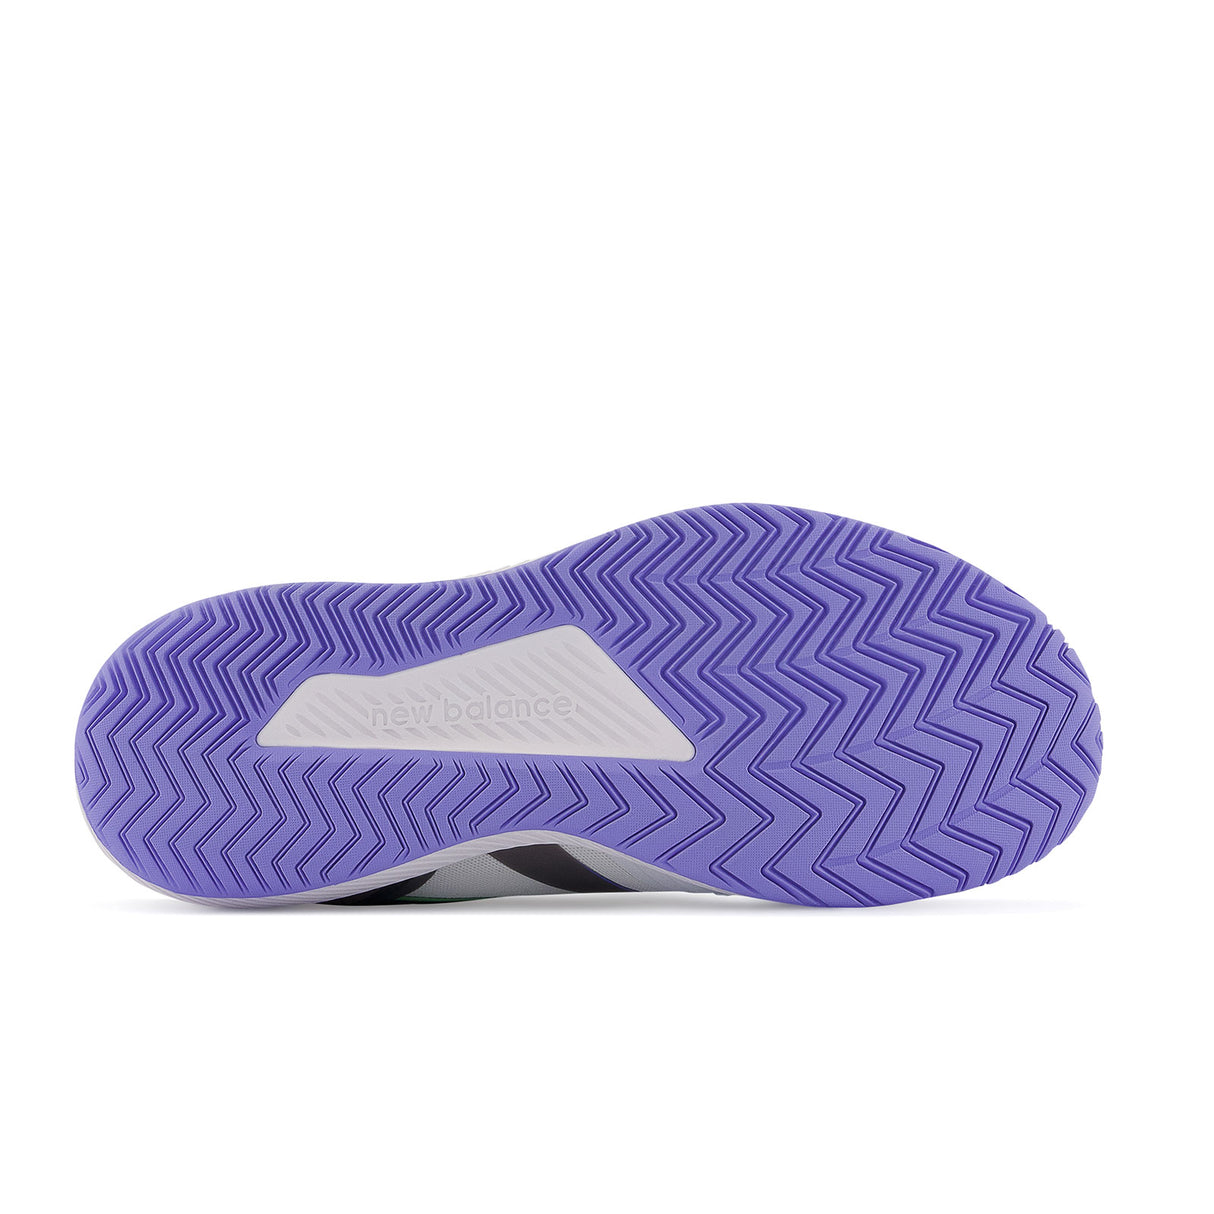 New Balance 796 v3 Court Shoe (Women) - NB White/Castlerock/Vibrant Violet Athletic - Running - Neutral - The Heel Shoe Fitters